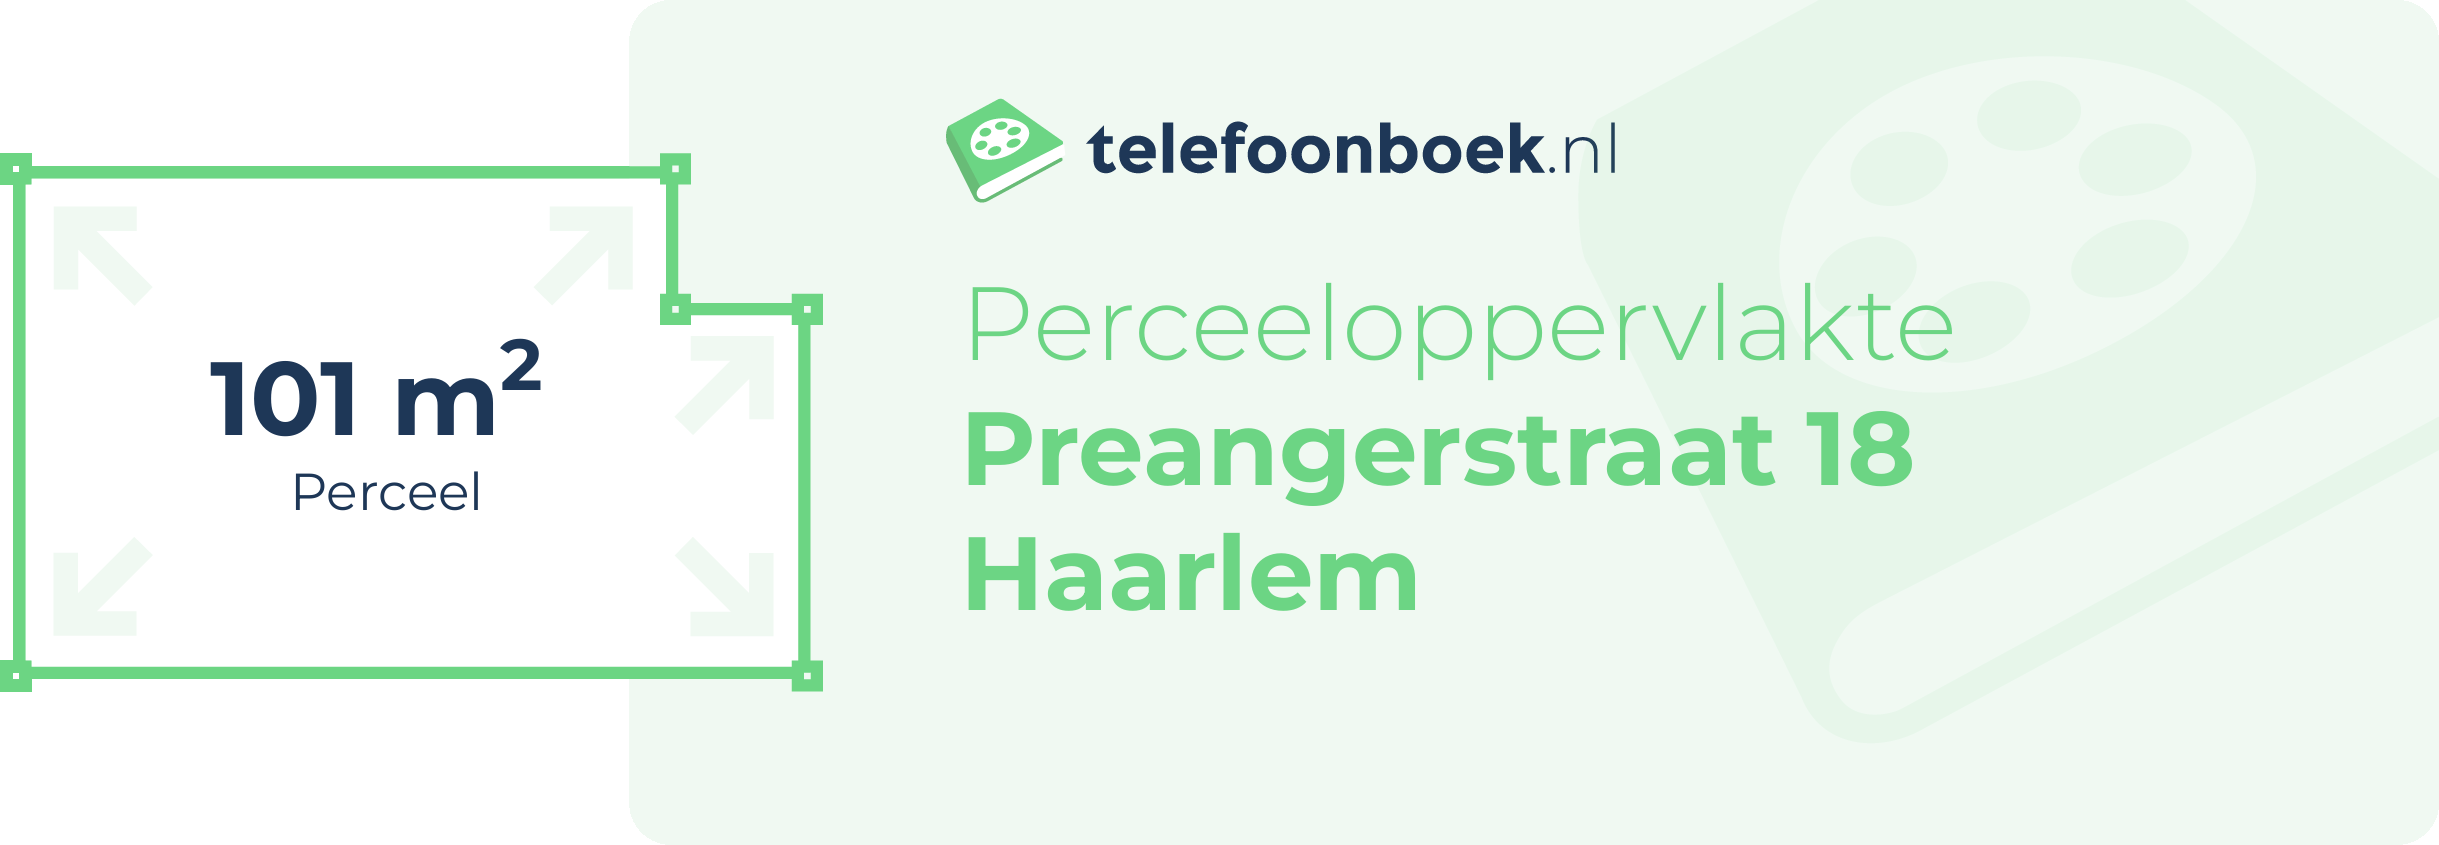 Perceeloppervlakte Preangerstraat 18 Haarlem